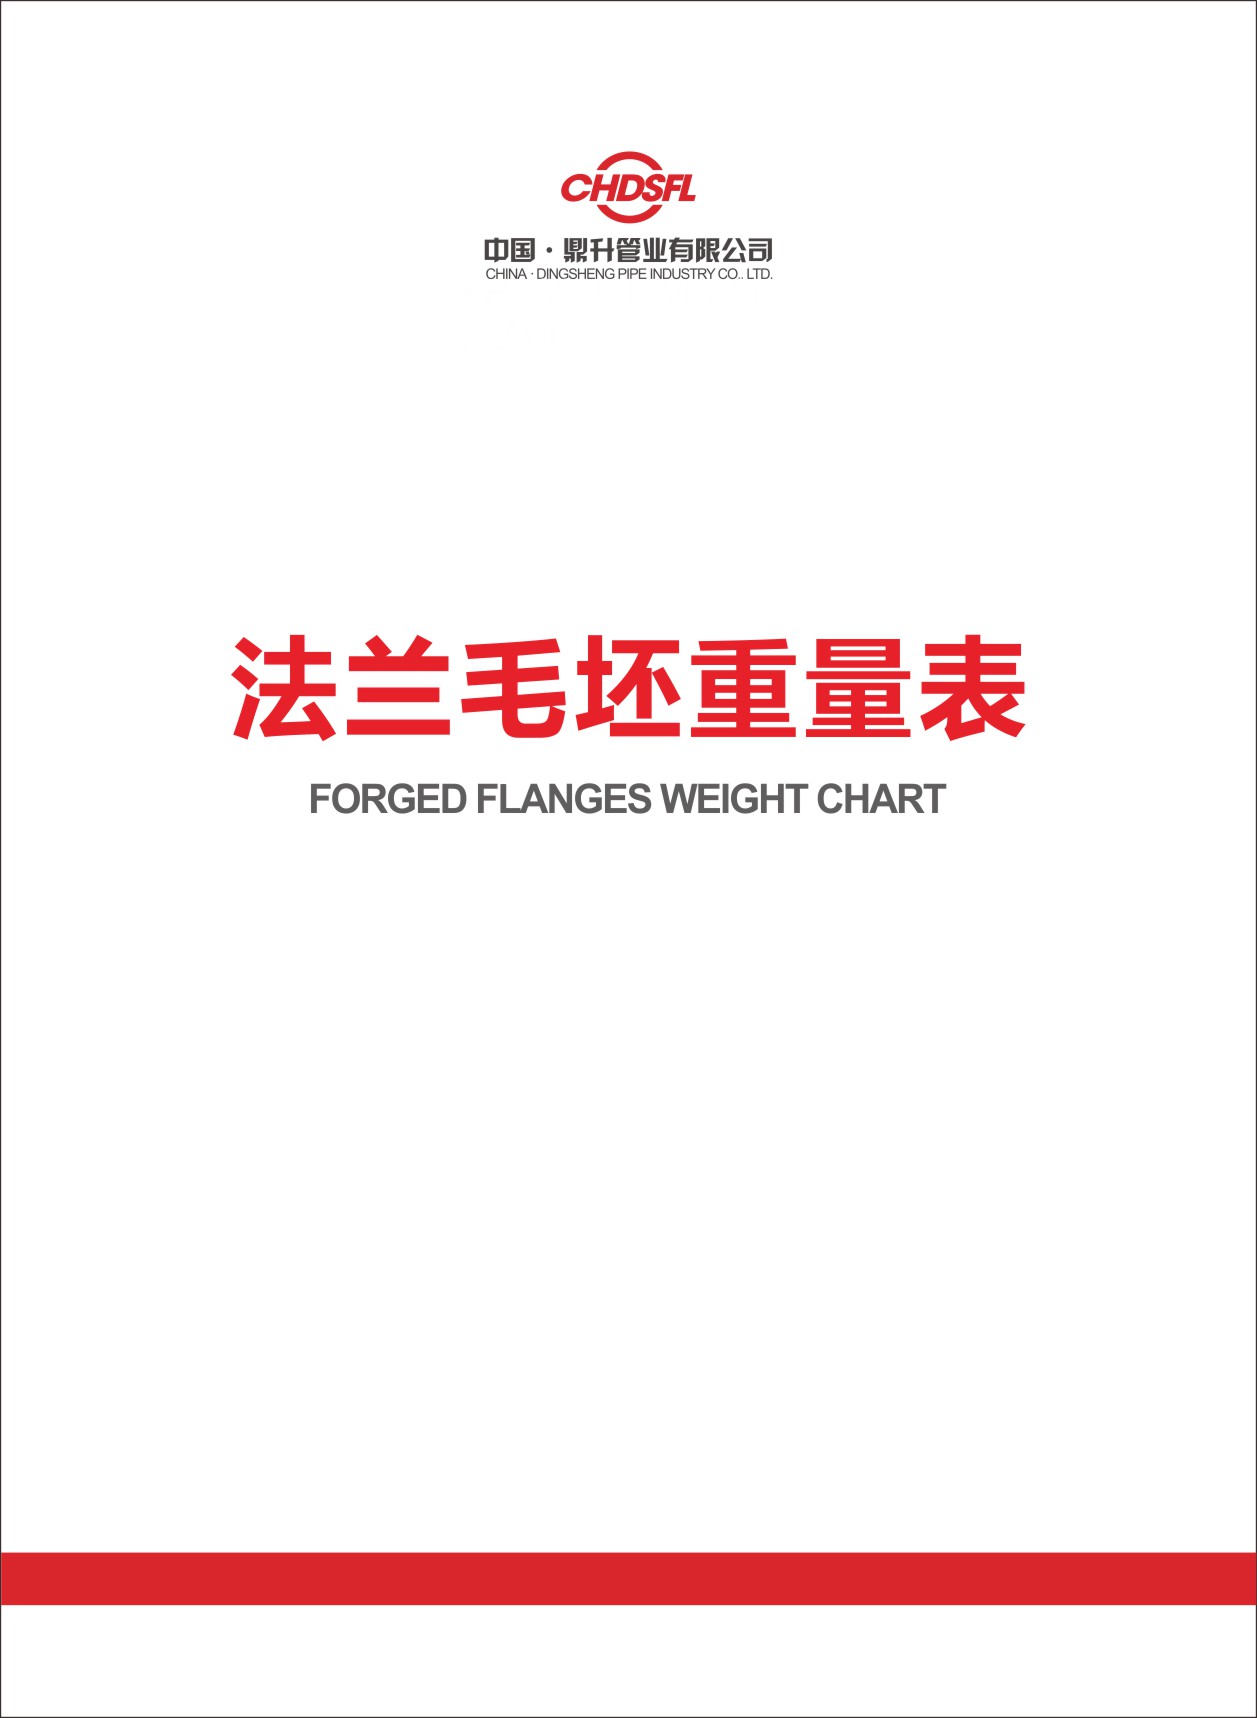 Flange Blank Weight Chart